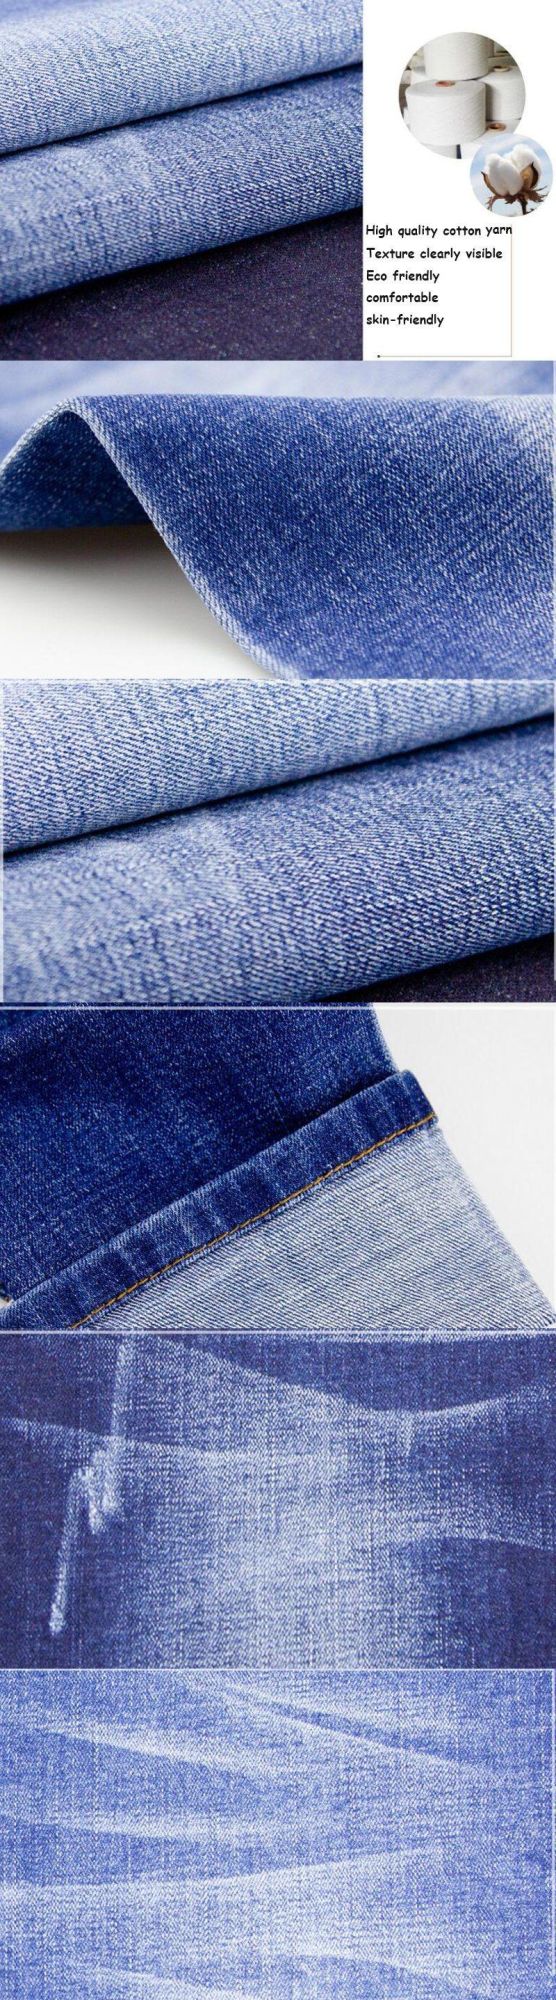 Stretch Jeans Denim Fabric Free Sample Twill Cotton Denim Fabric